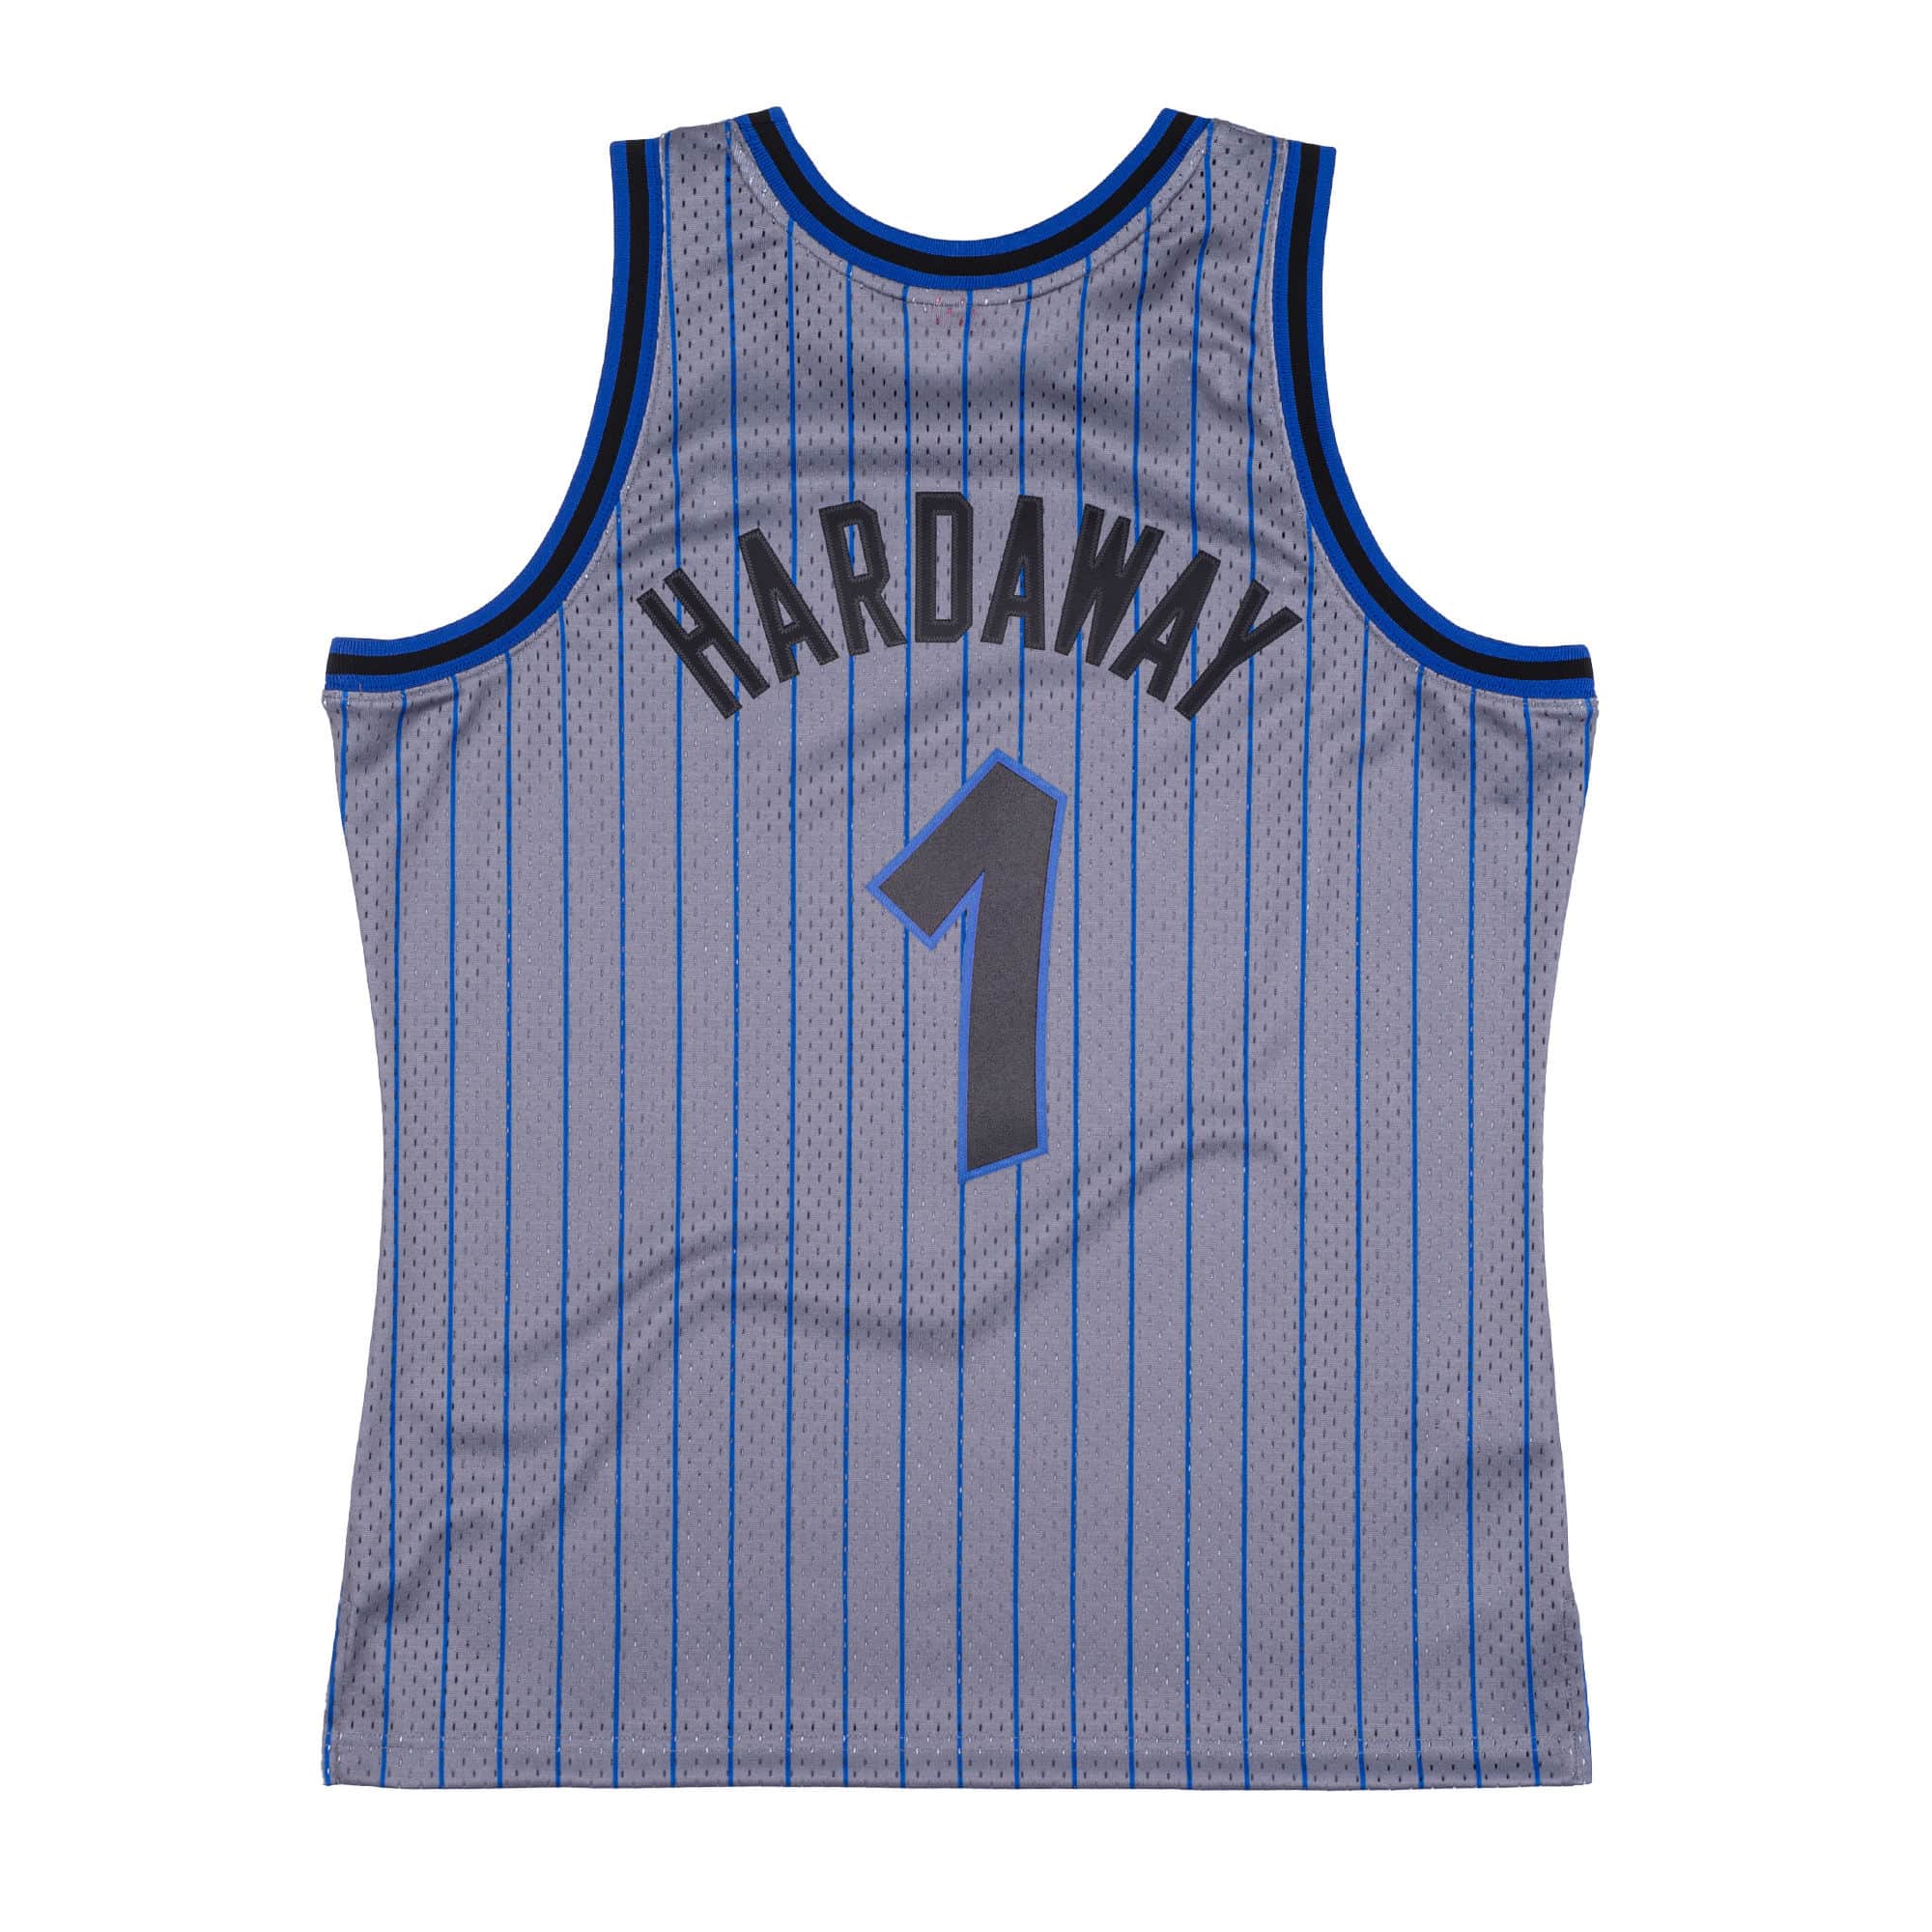 Orlando Magic Hardaway 1 nba basketball swingman retro jersey blue limited  edition shirt